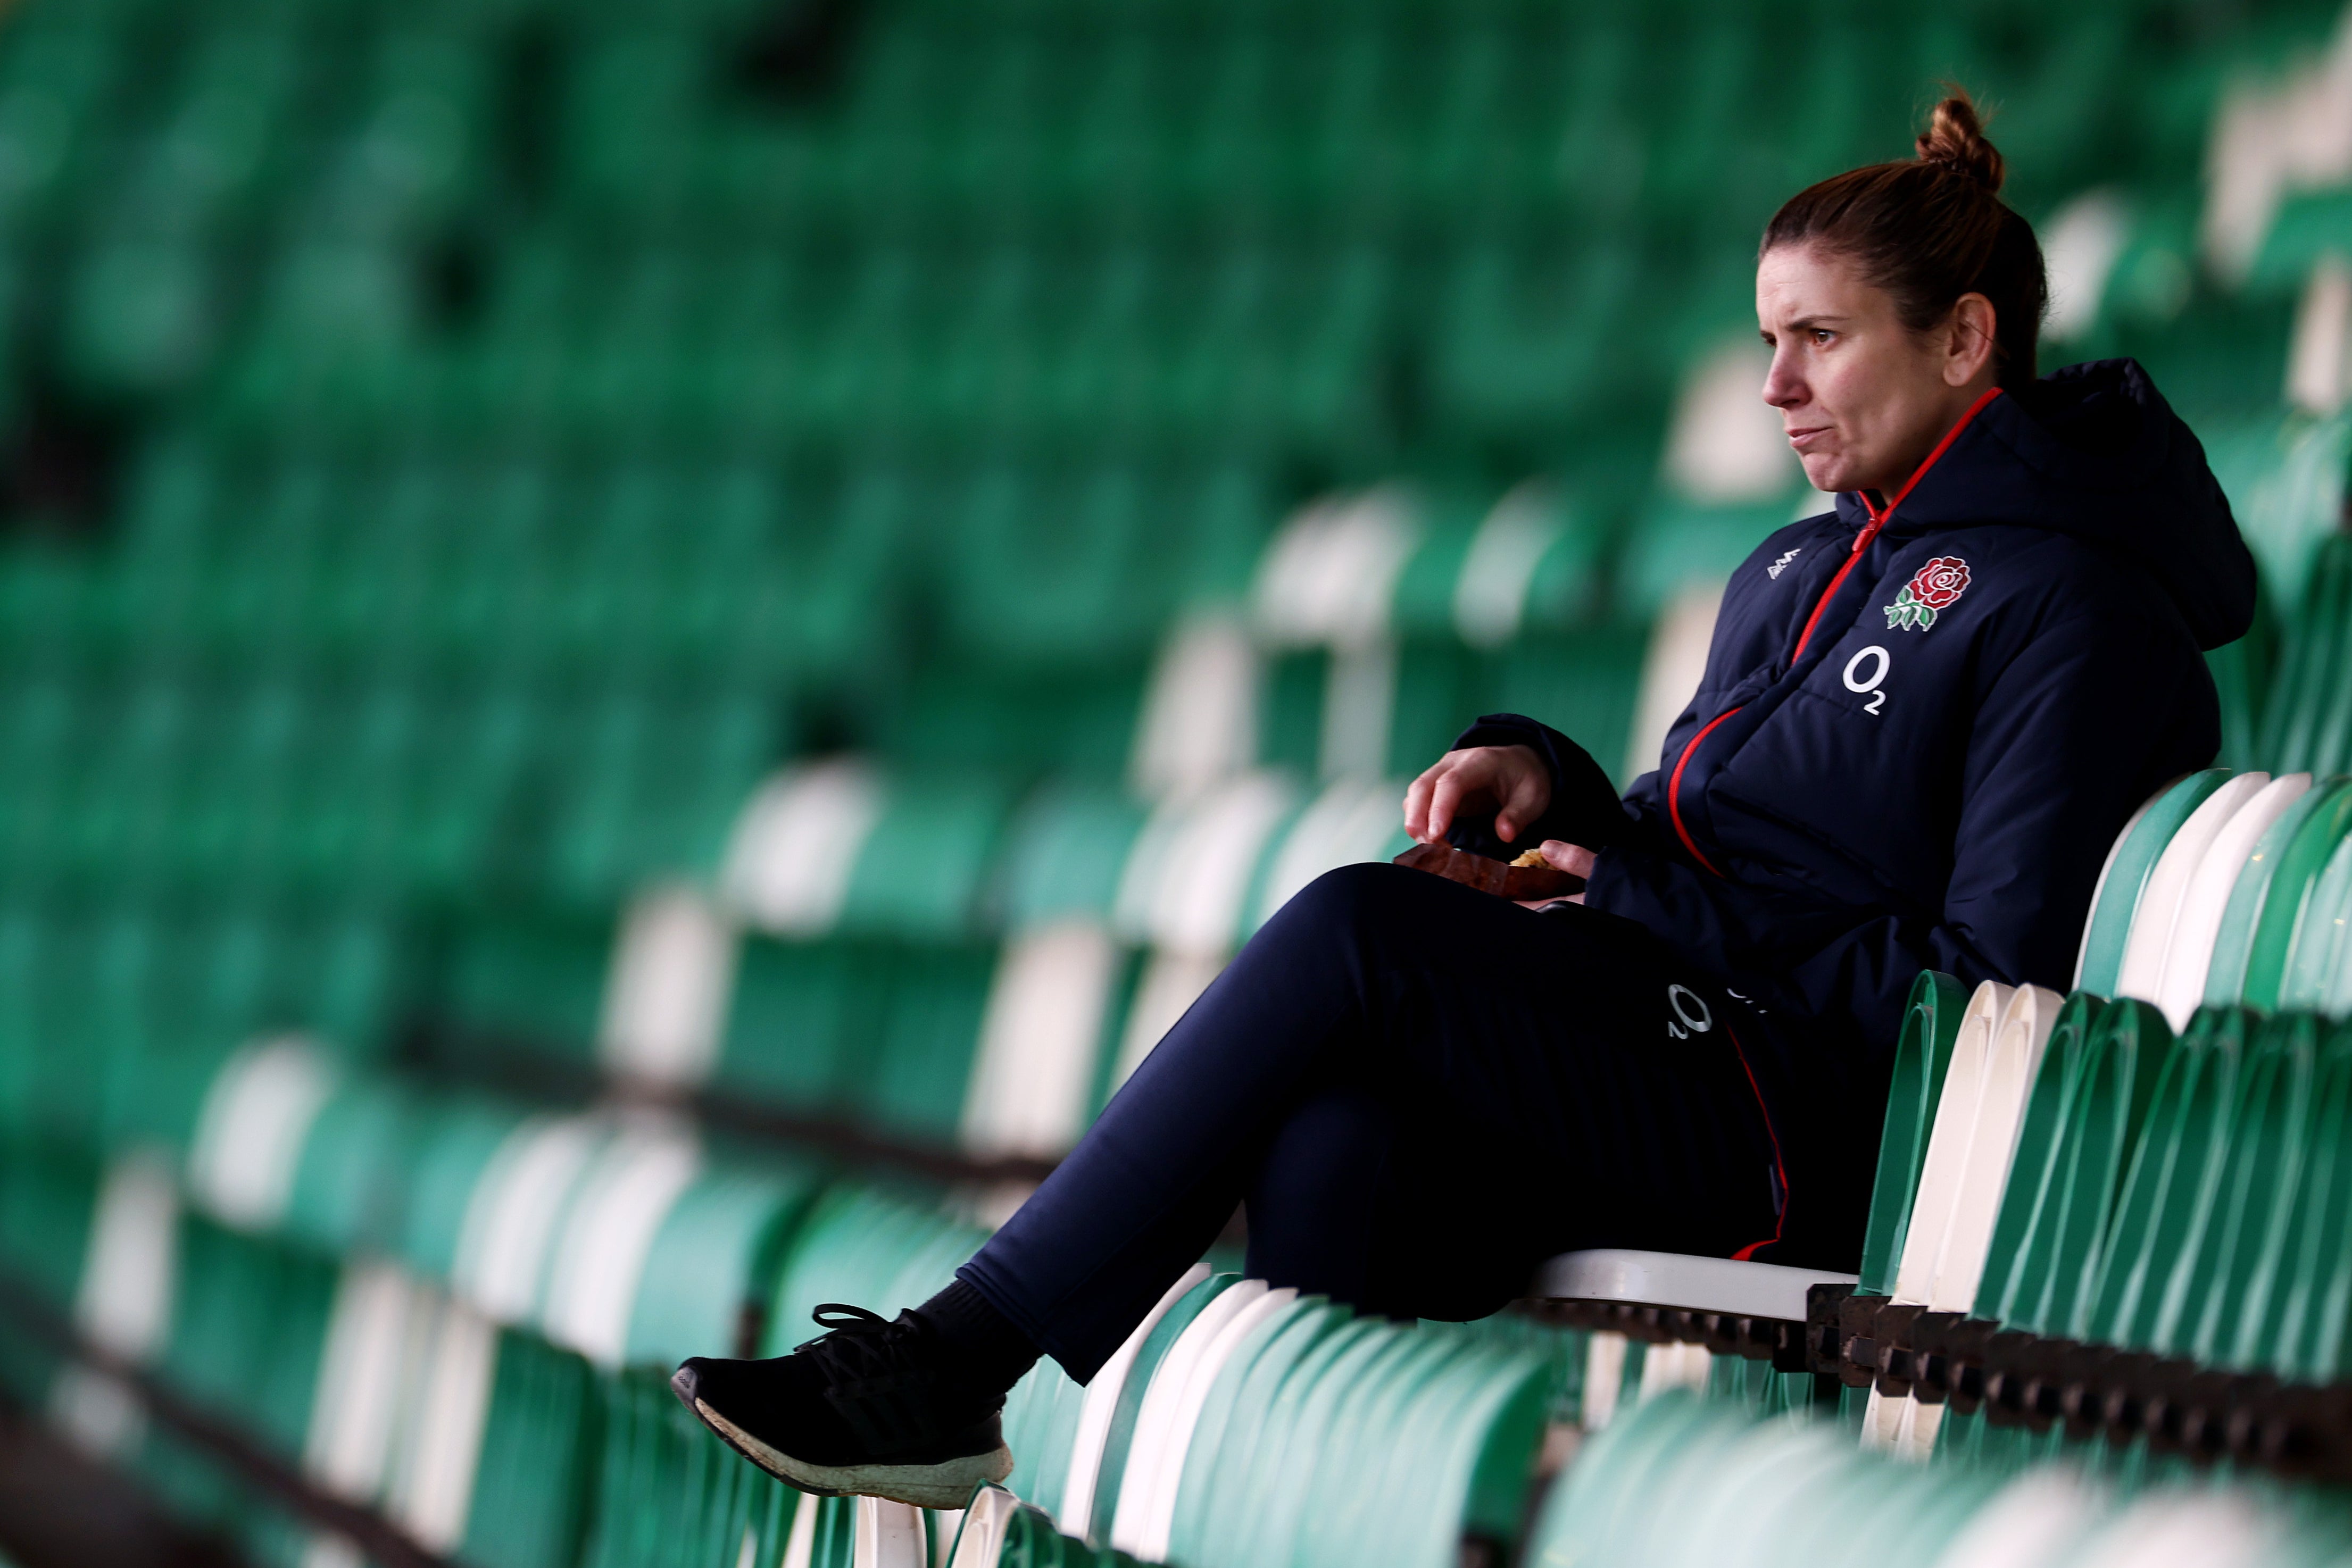 Sarah Hunter has become an England coach after concluding her playing career